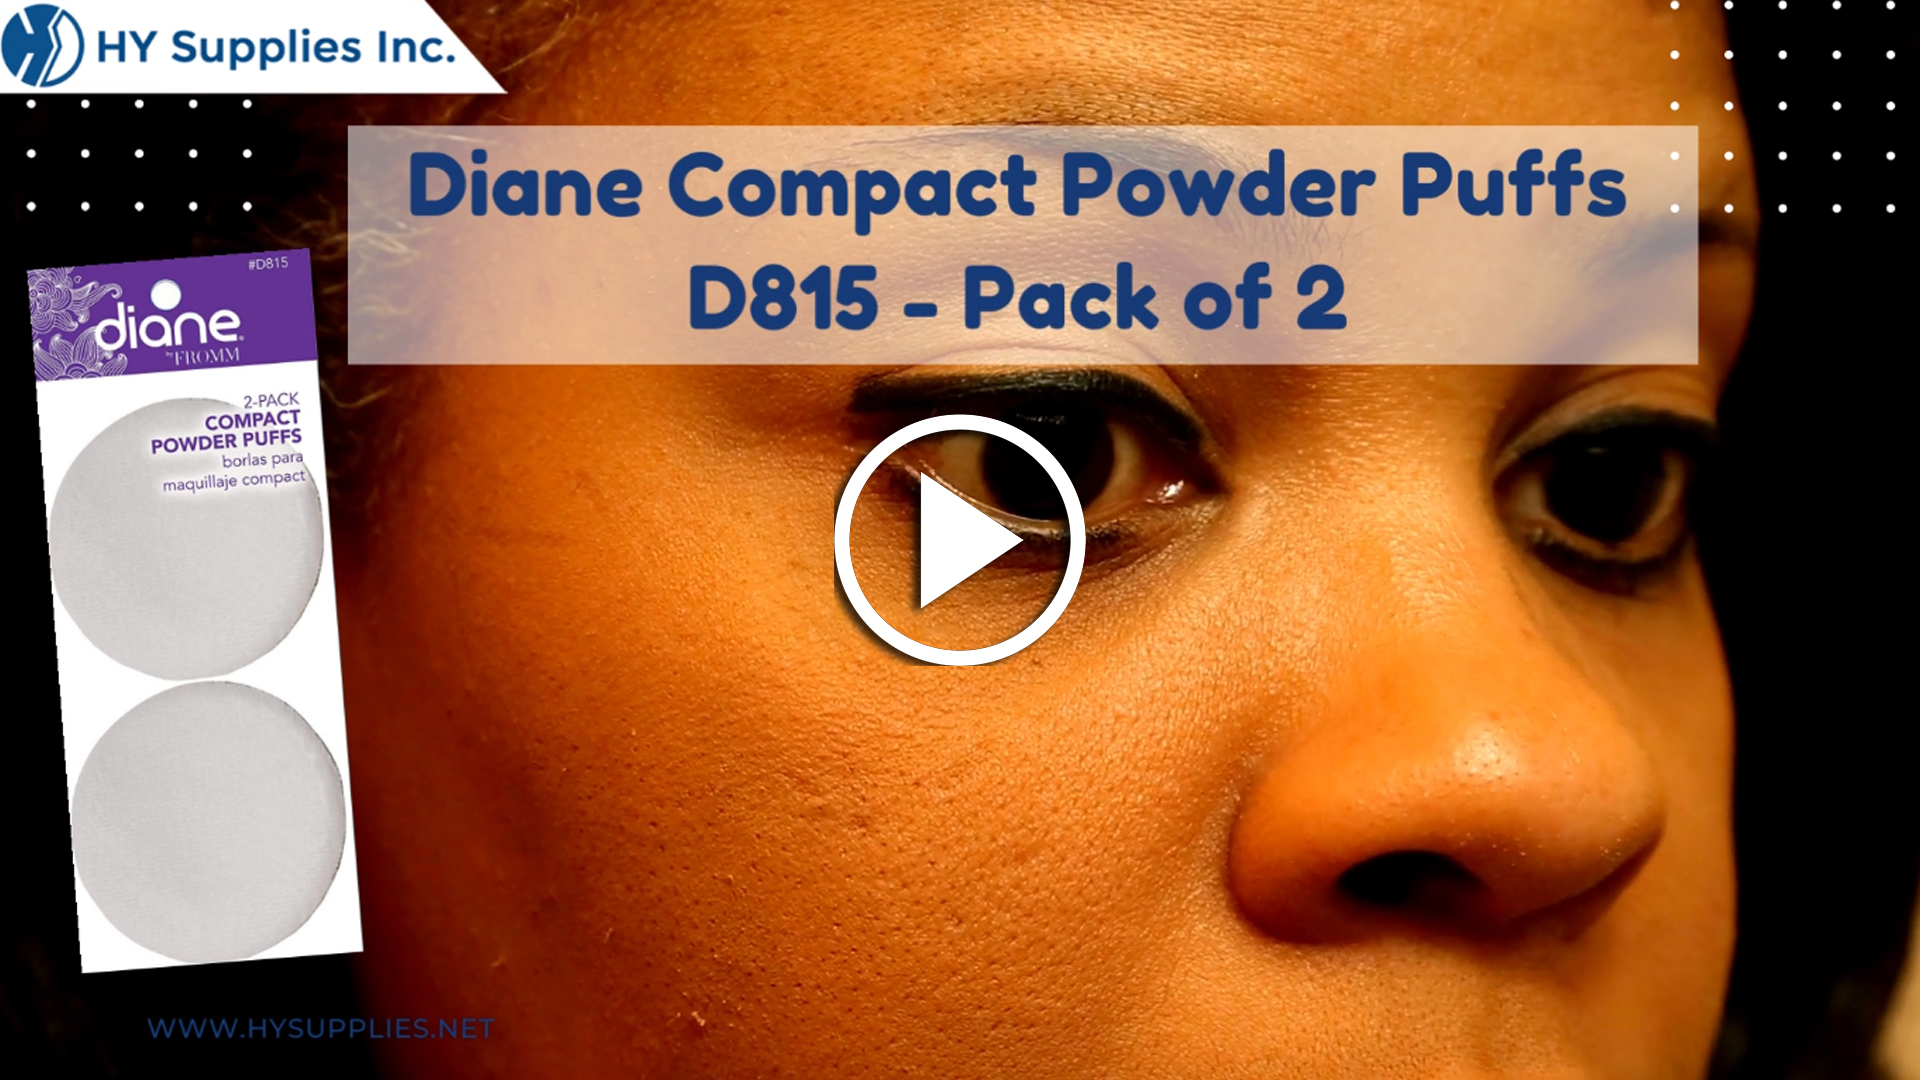 Diane Compact Powder Puffs D815 - Pack of 2